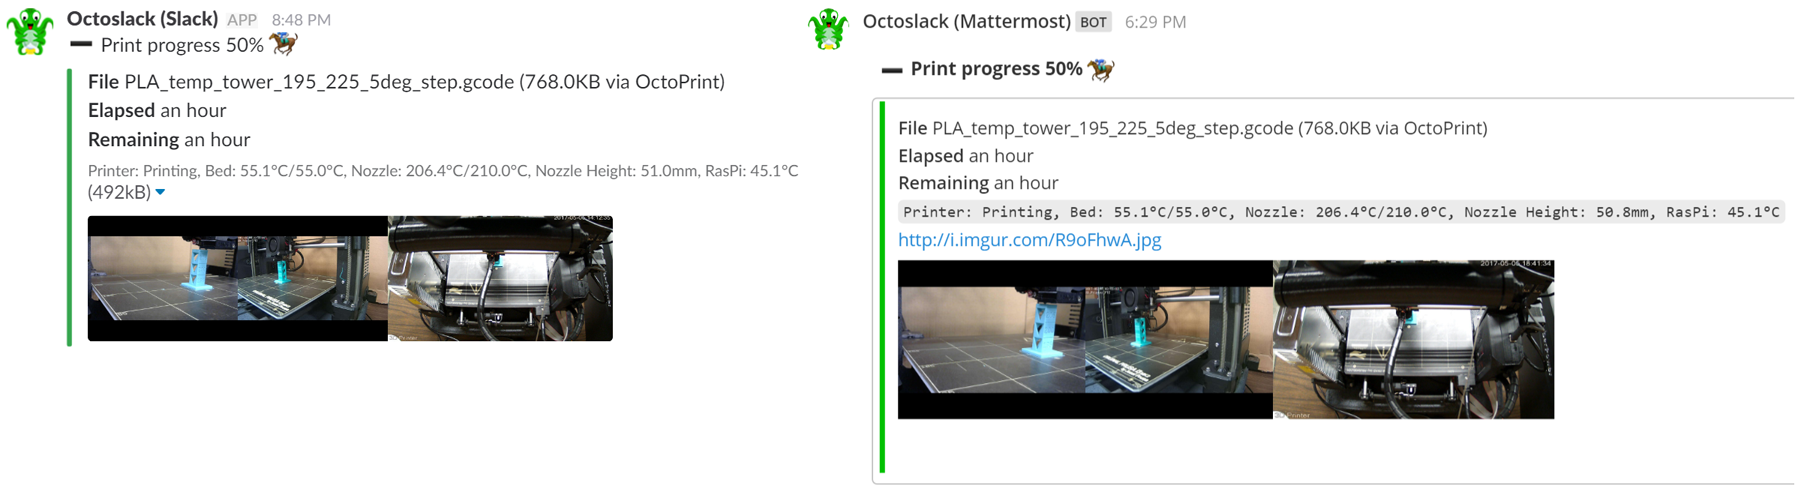 Slack/Mattermost - Print progress